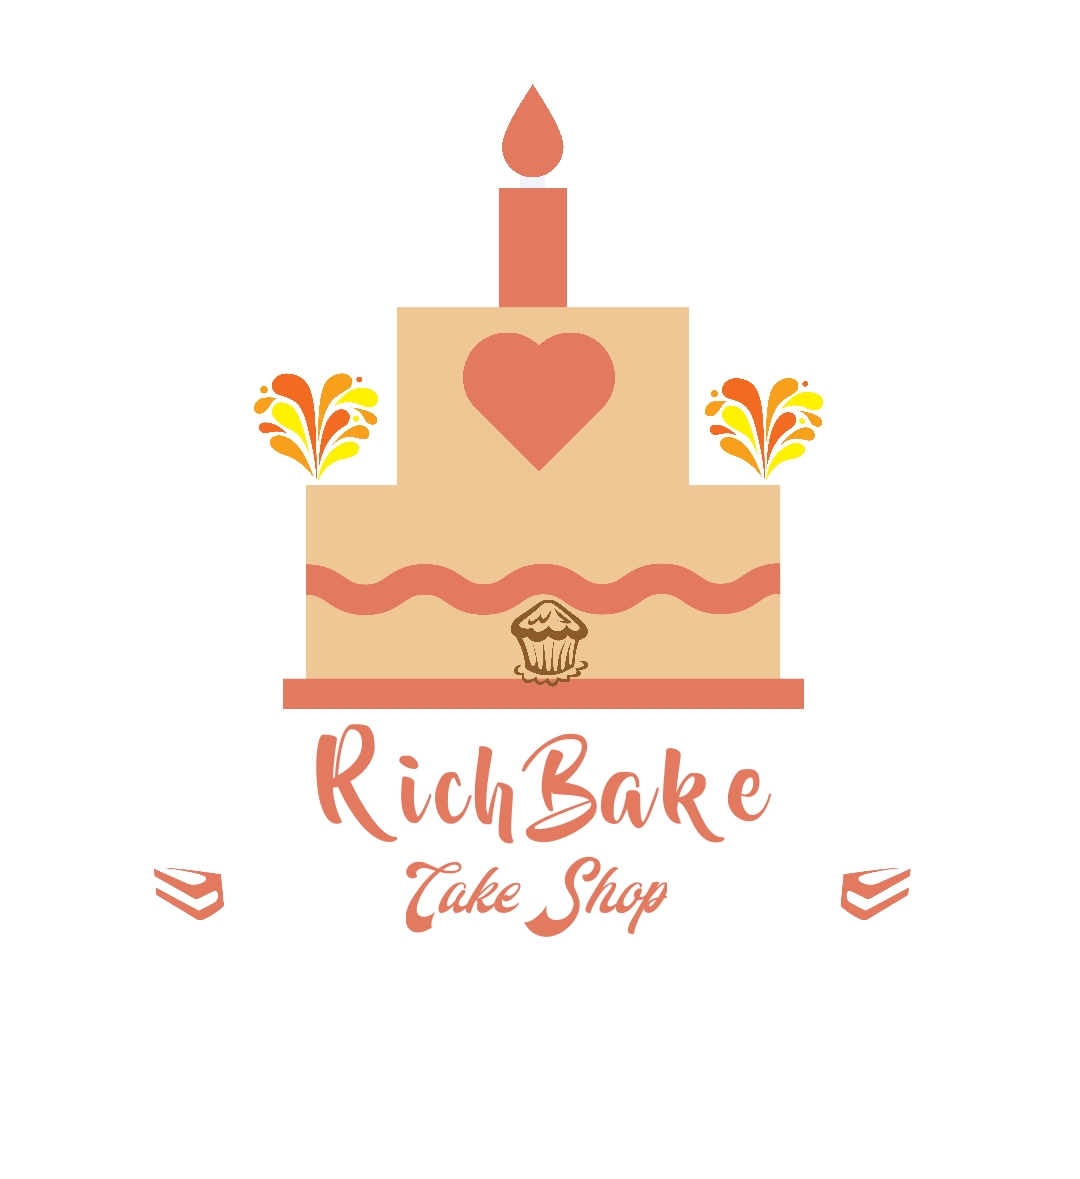 RichBake Cake Shop - Rohini Delhi online delivery in Noida, Delhi, NCR,
                    Gurgaon